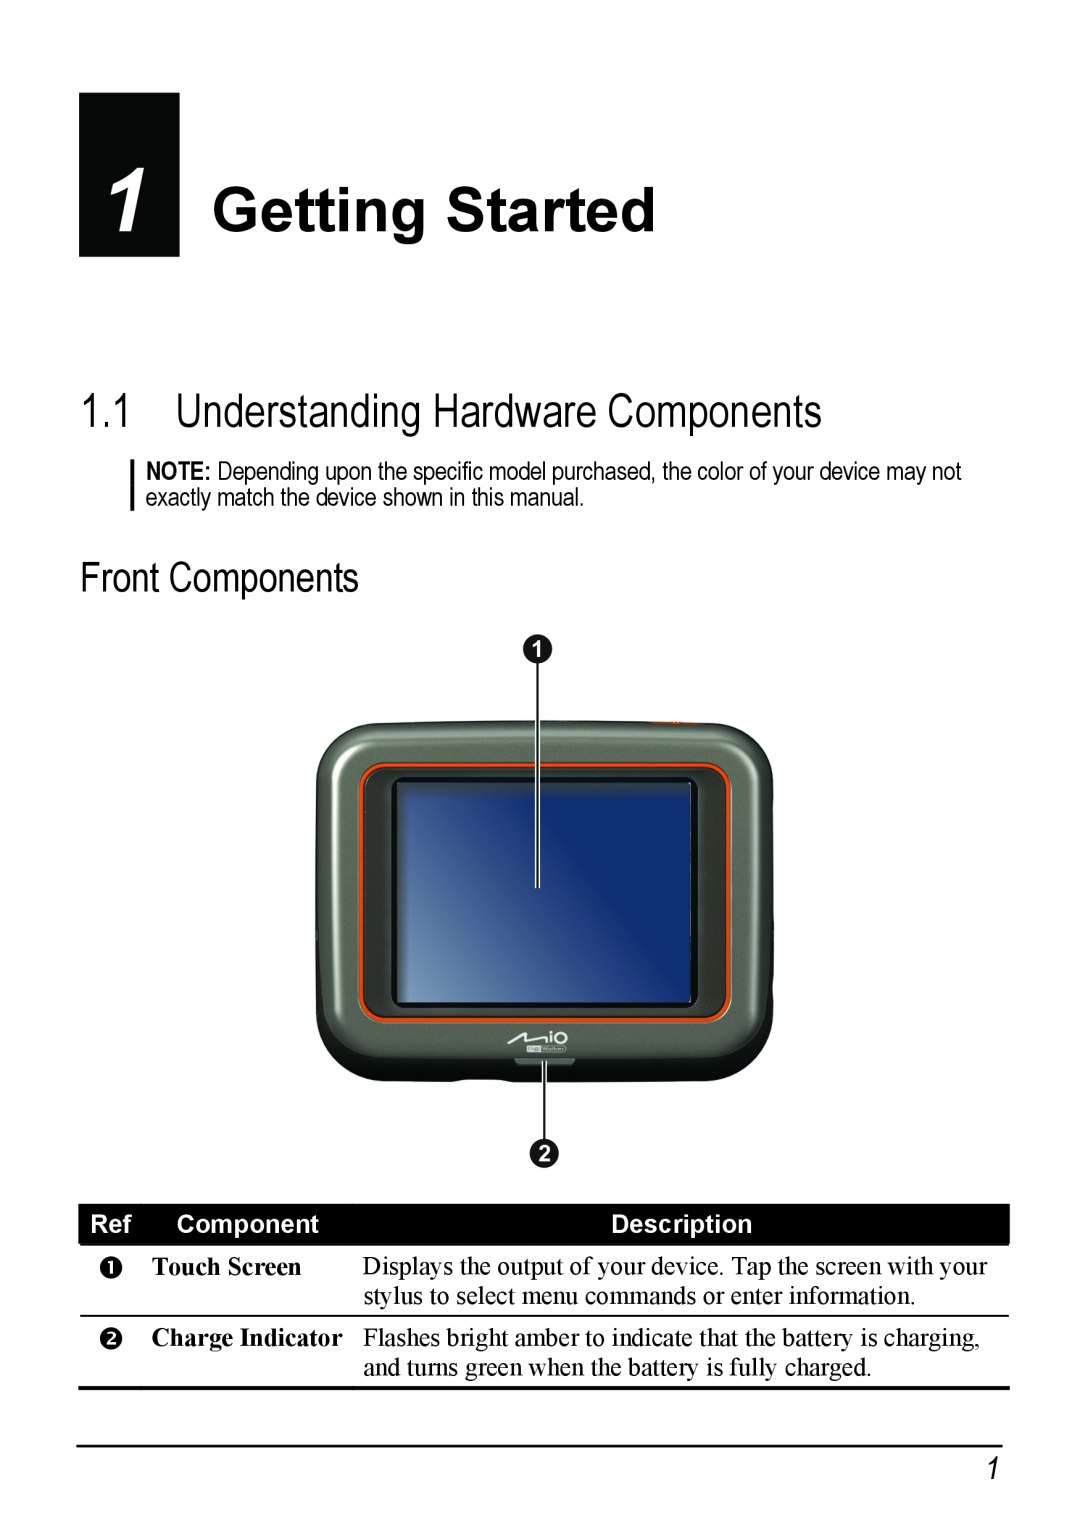 Jabra C220 manual Getting Started, Understanding Hardware Components, Front Components, Description 